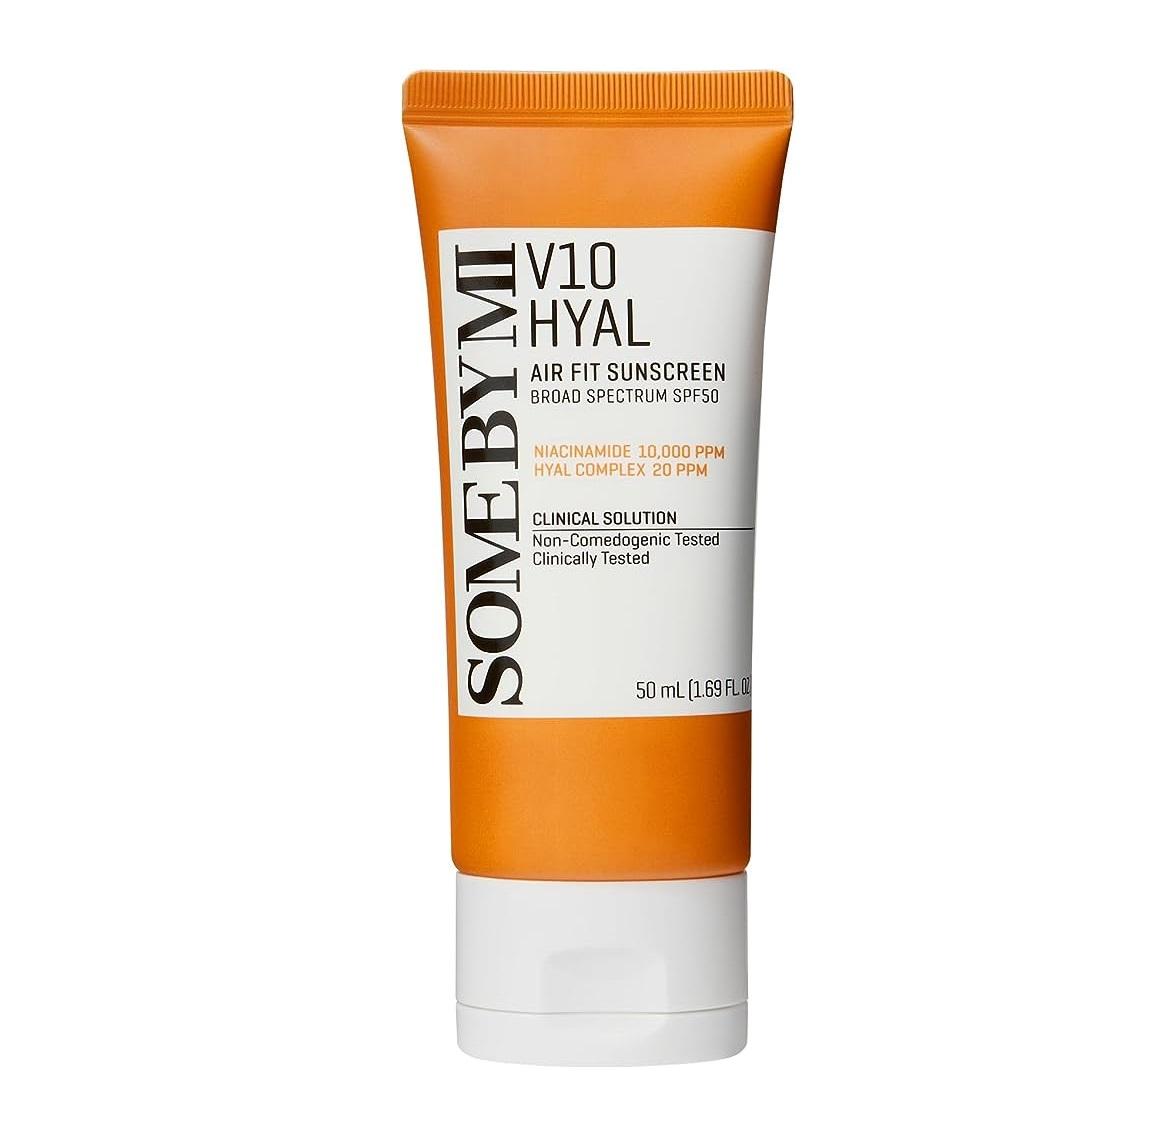 V10 Hyal Air Fit Sunscreen SPF50